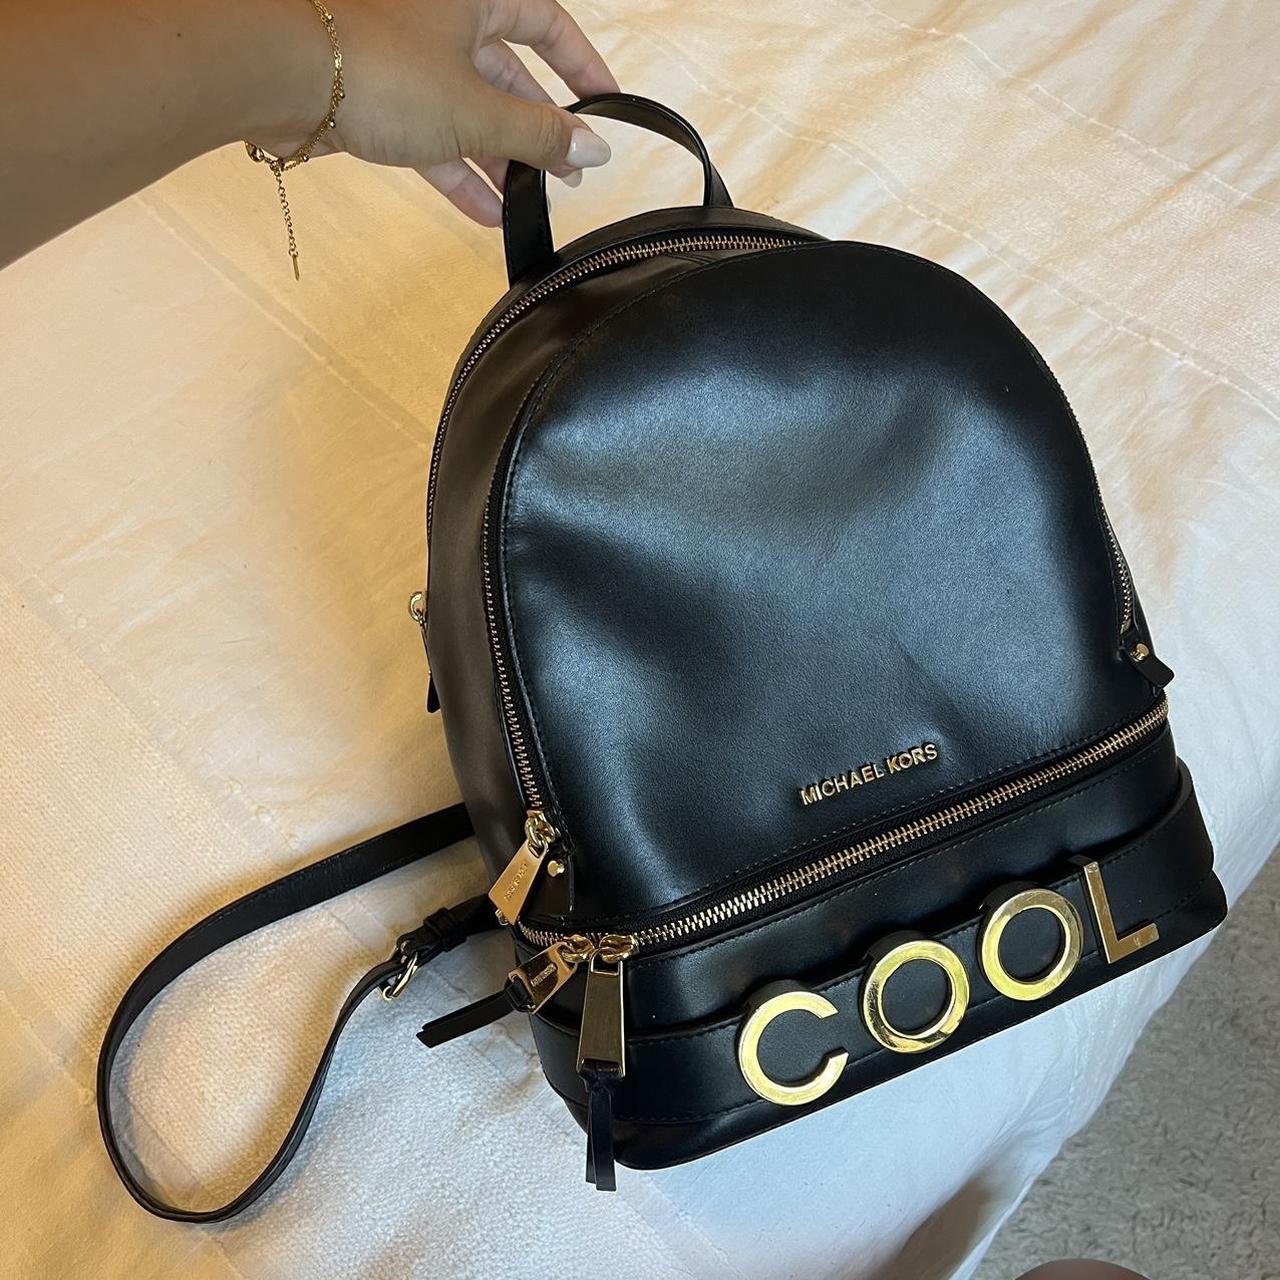 Michael Kors bagpack | Black leather backpack, Studded backpack, Micheal  kors backpack